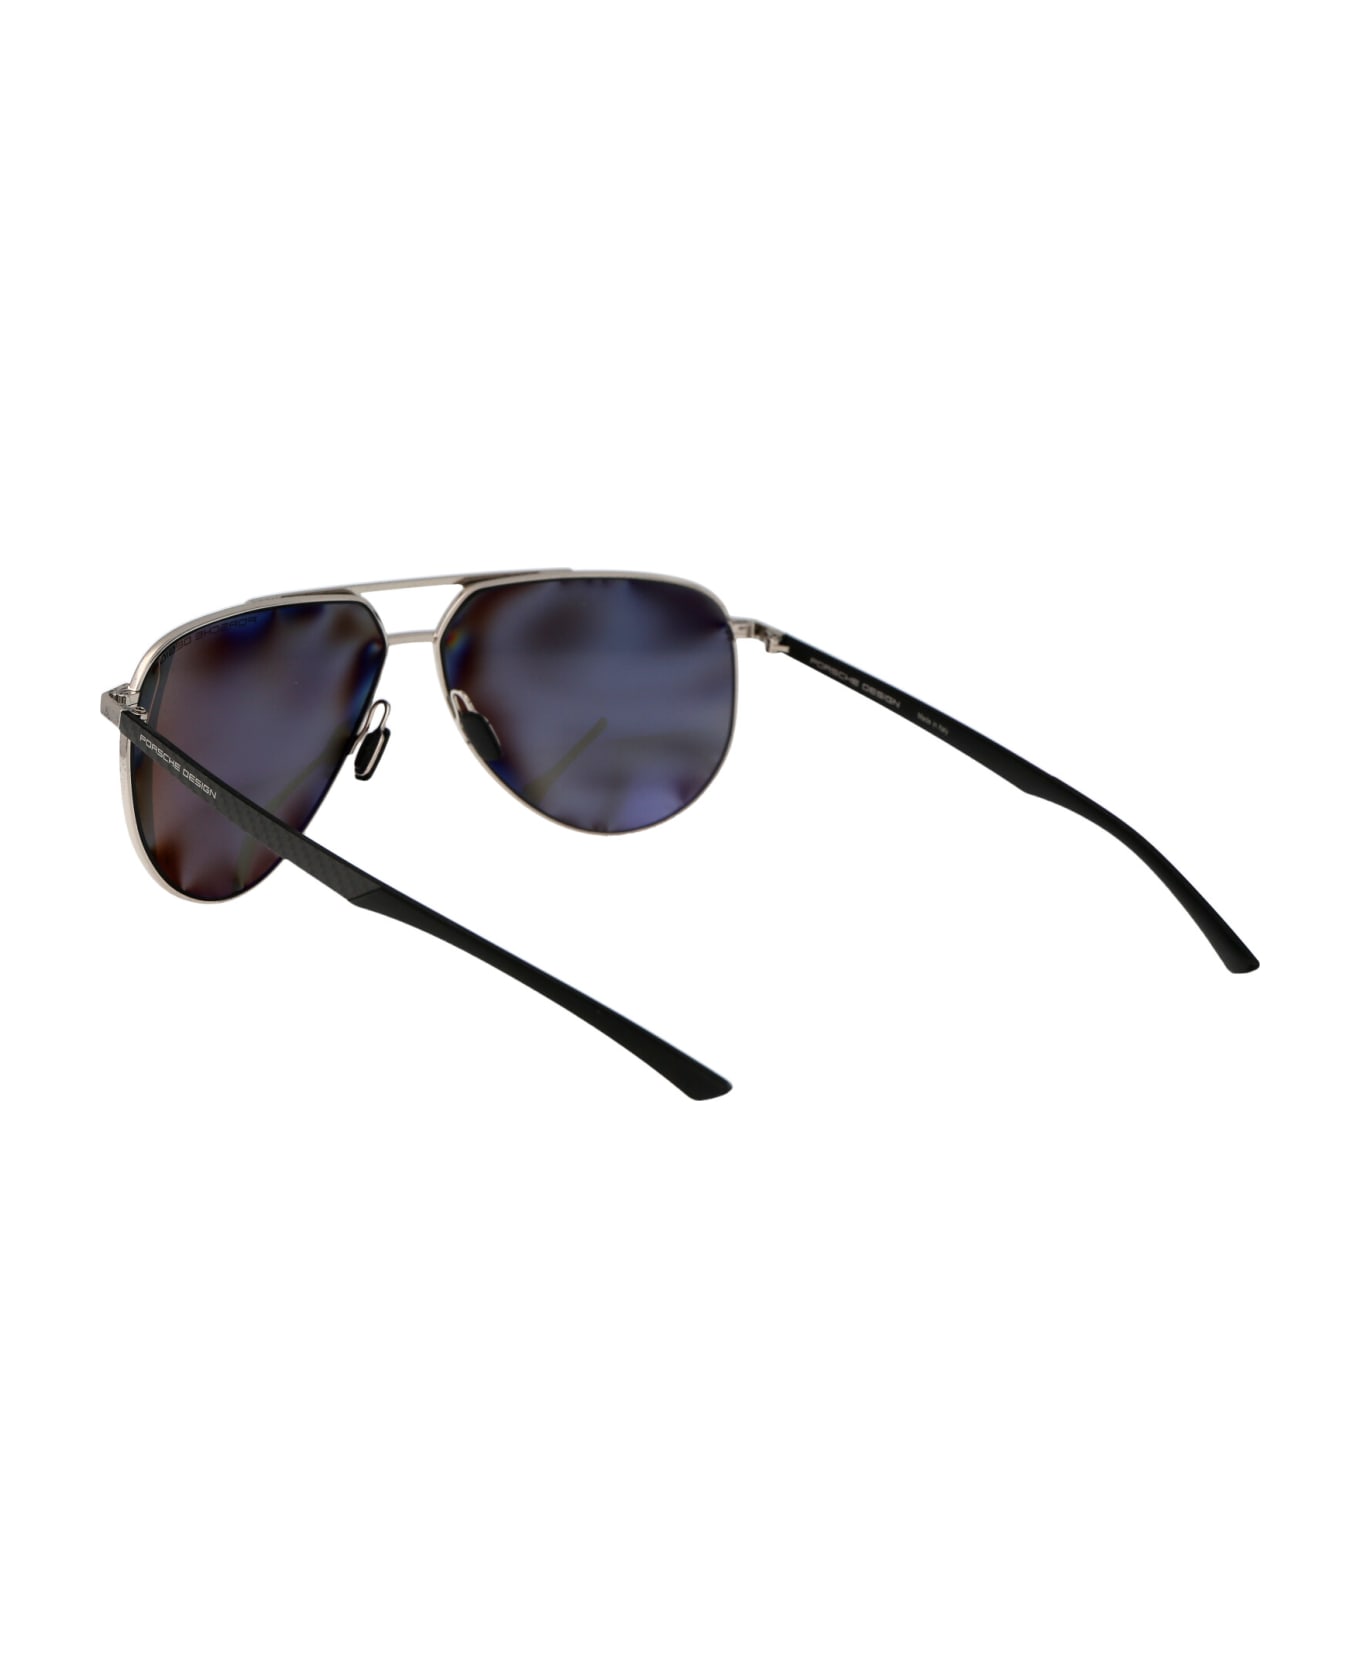 Porsche Design P8962 Sunglasses - B416 PALLADIUM BLACK サングラス